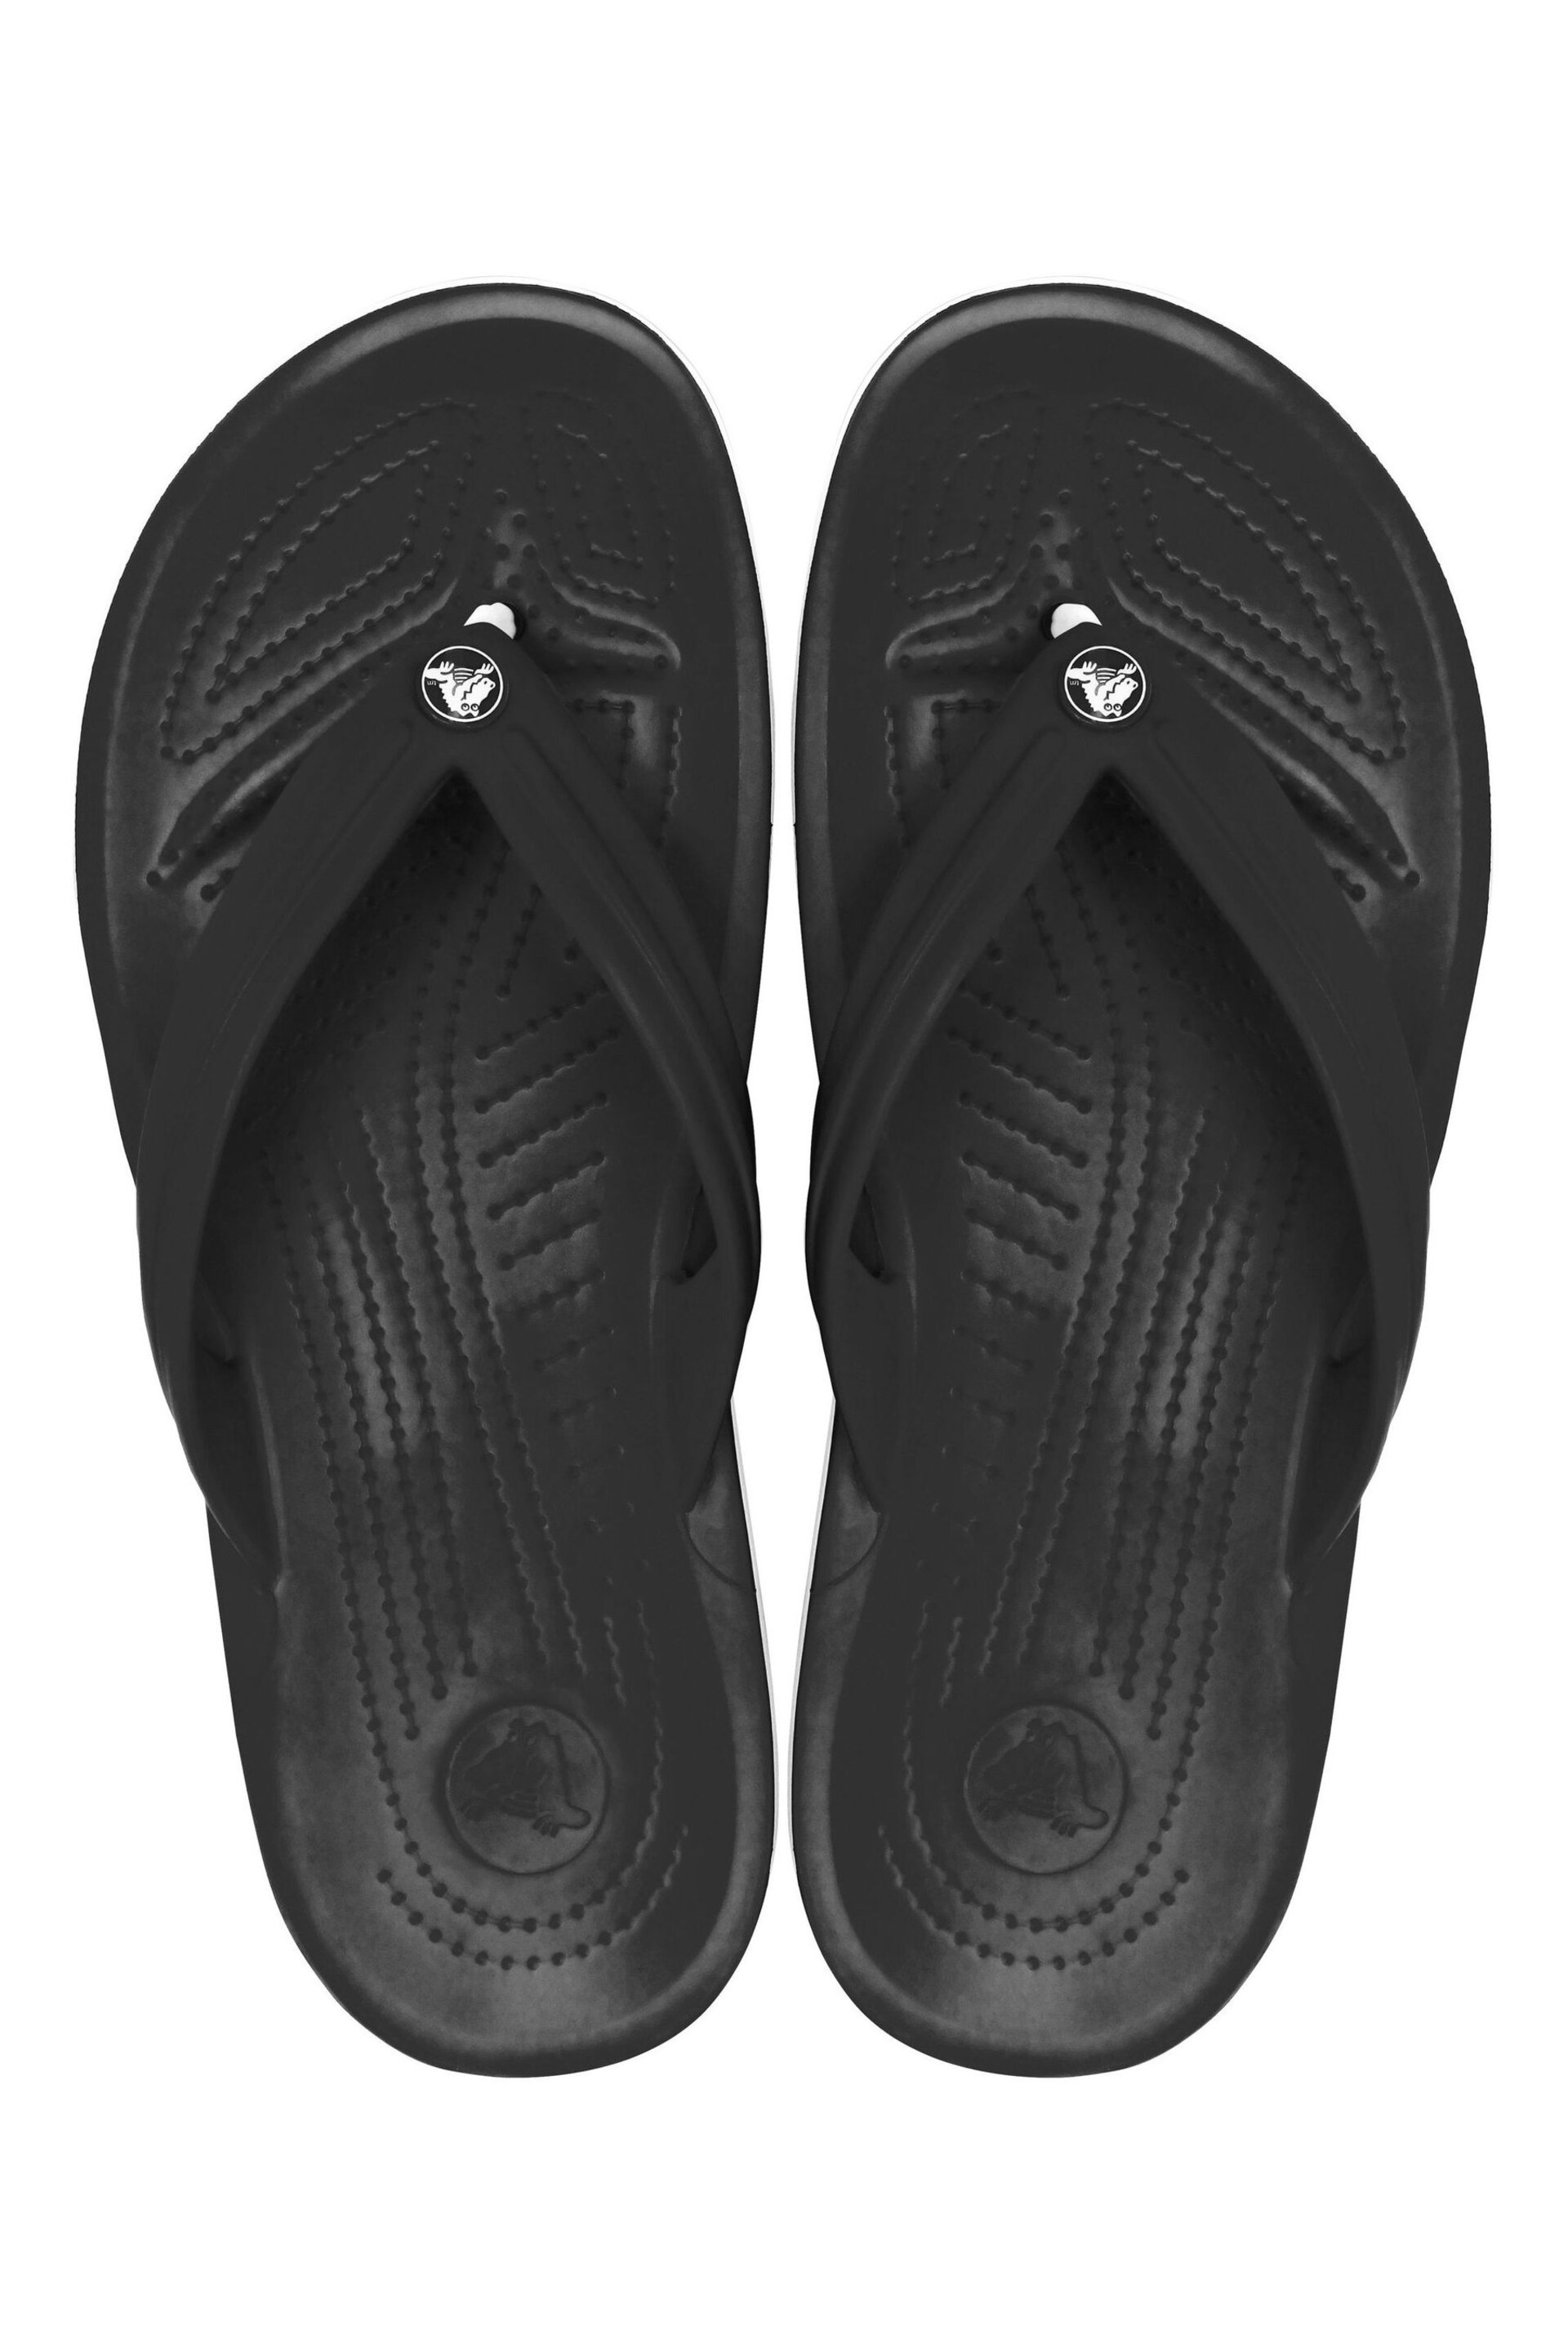 Crocs Crocband Black Flip - Image 4 of 6